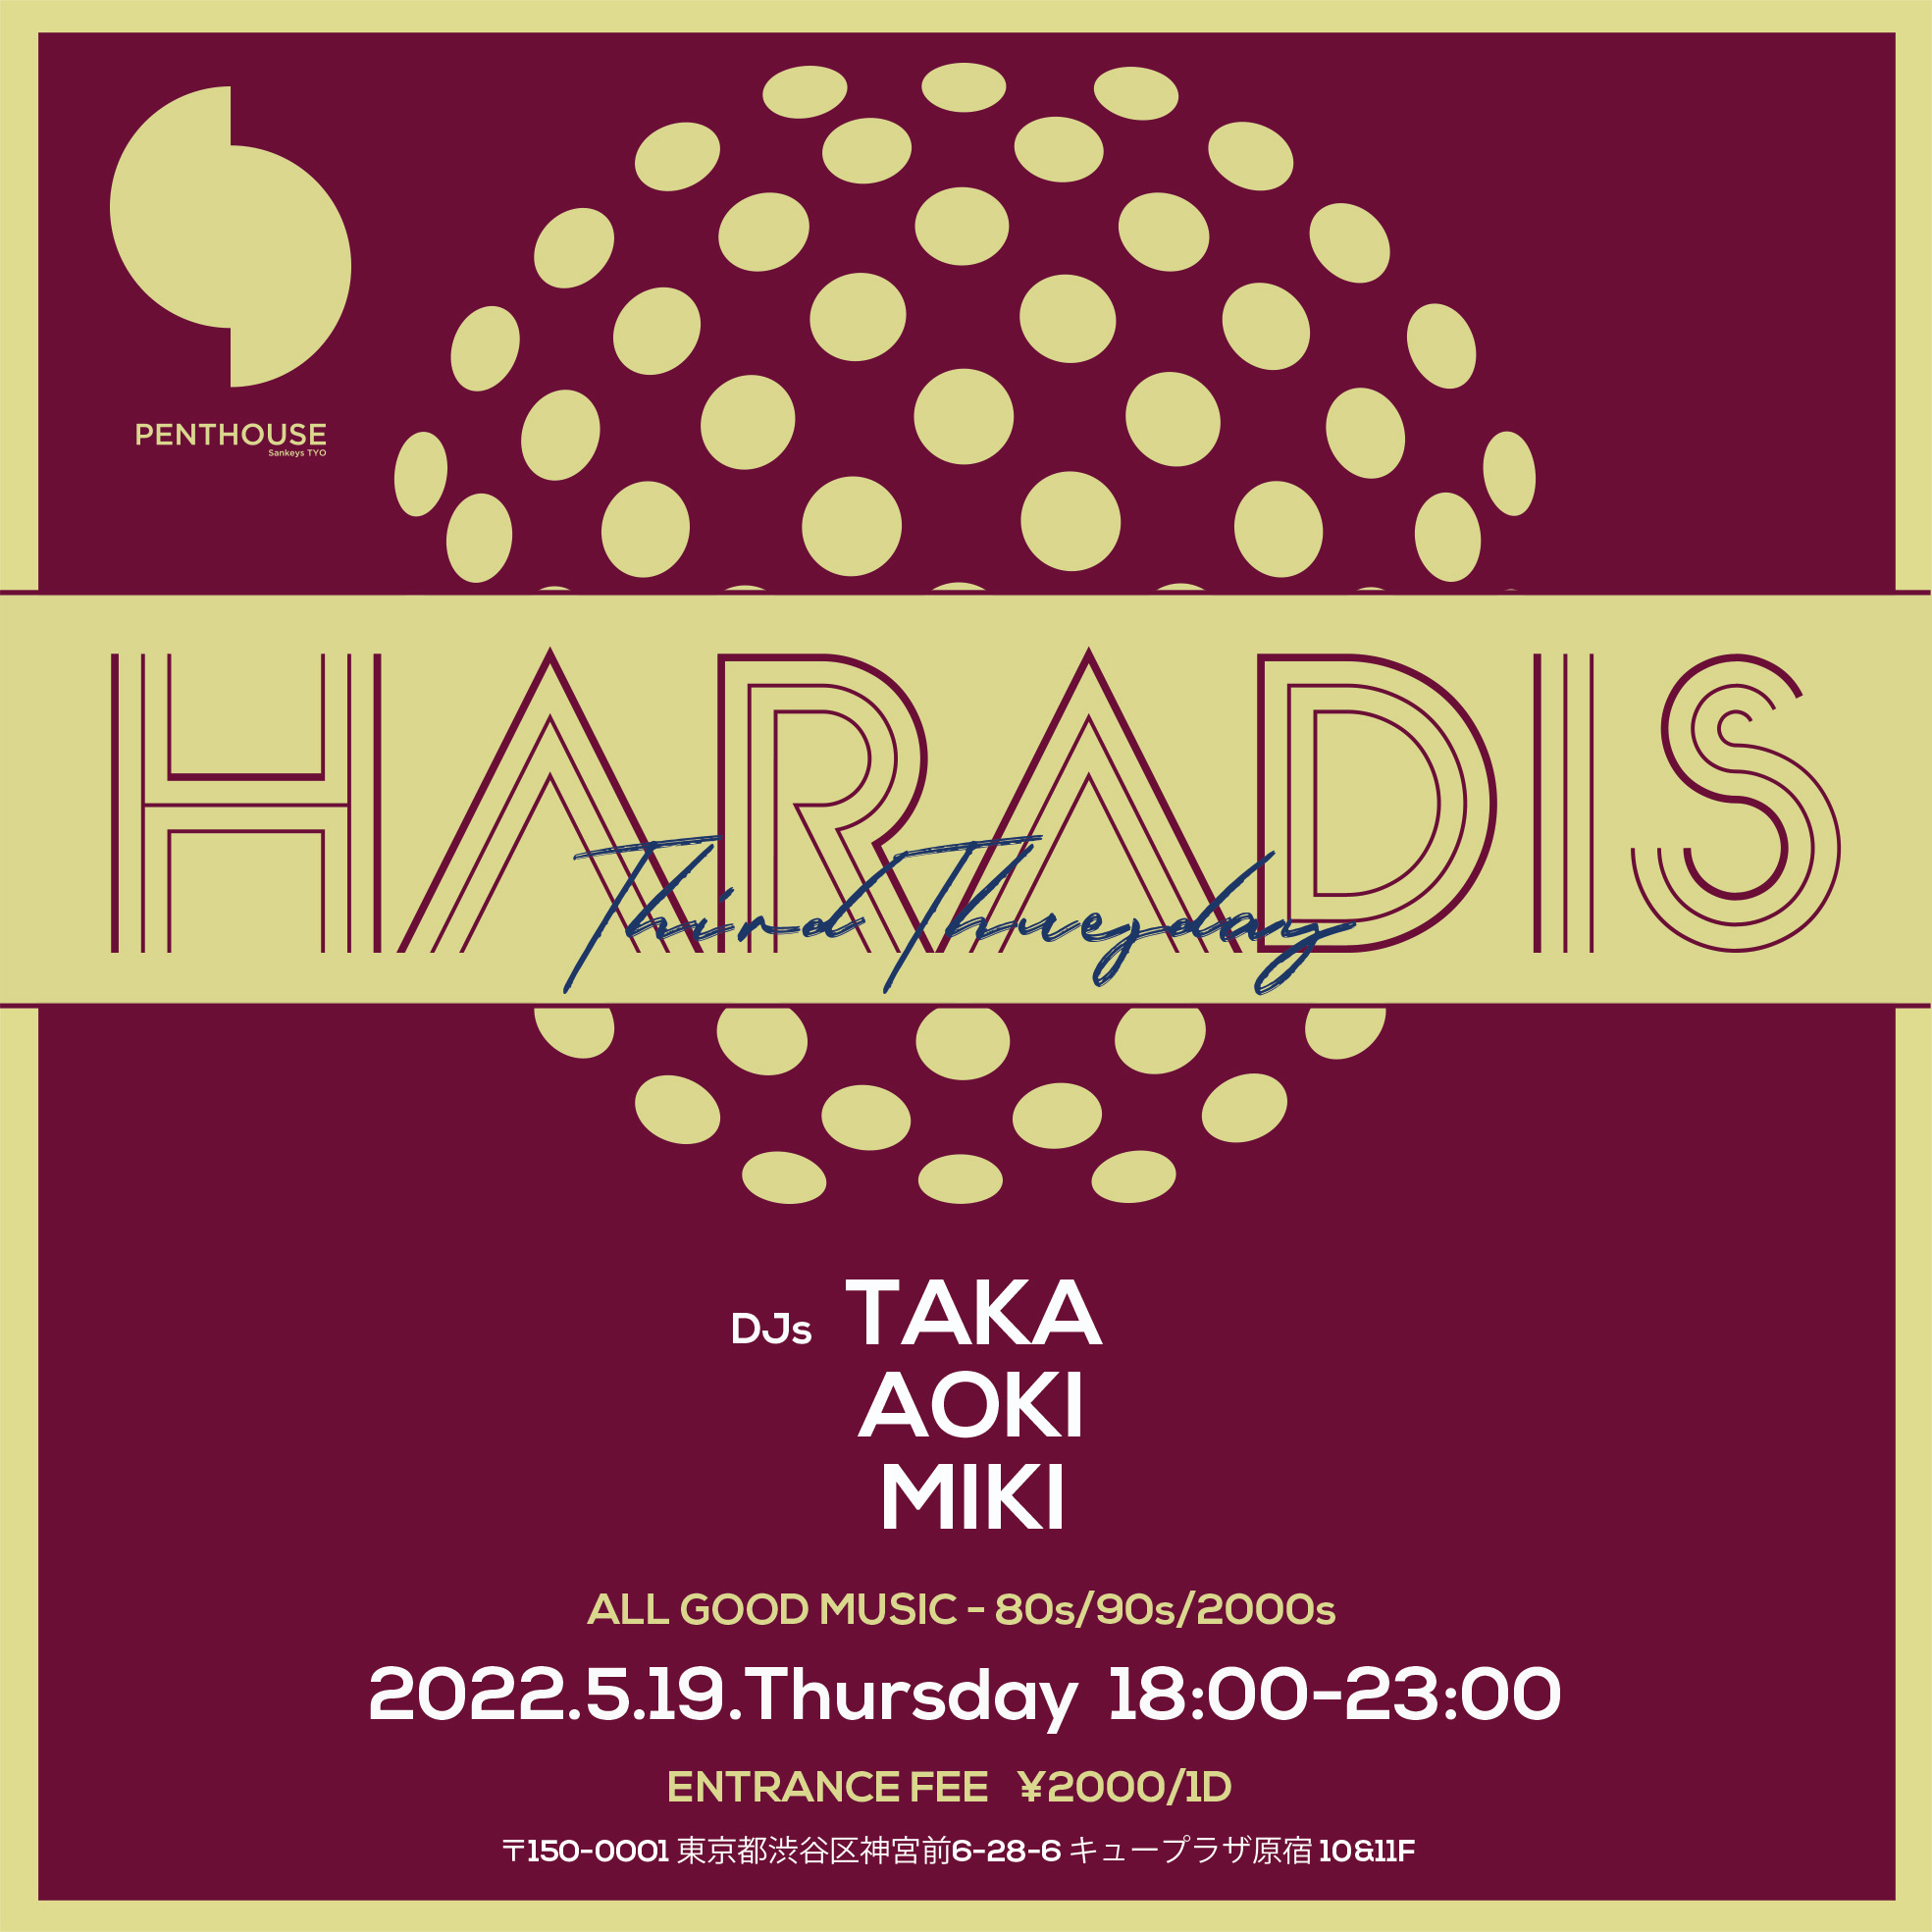 HARADIS -Third Thursday-